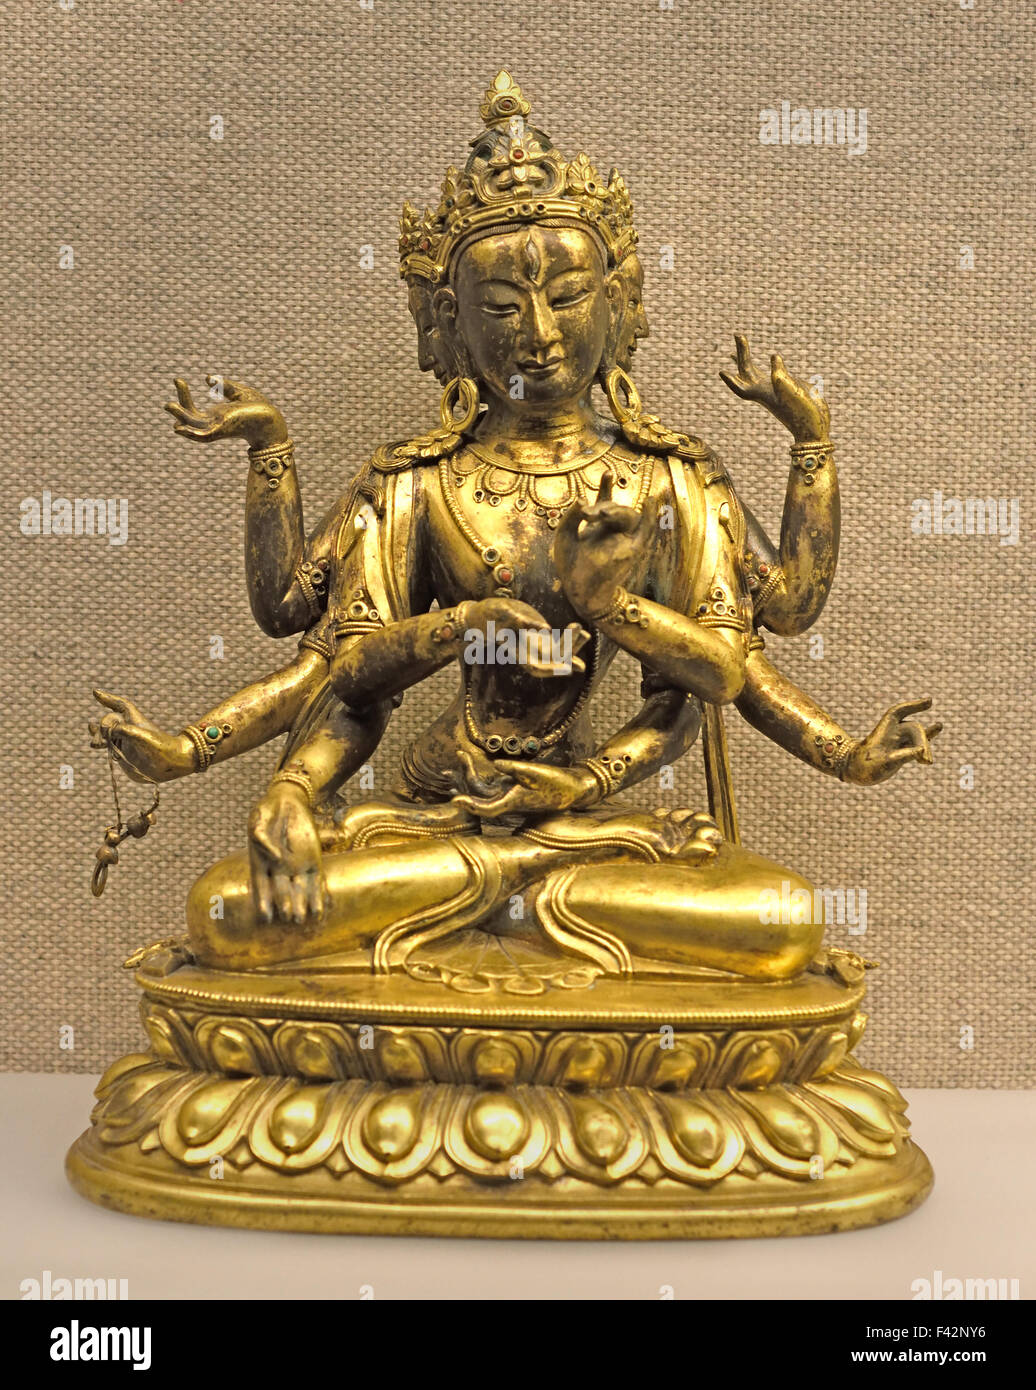 Ottone dorato figurina di Dea tibetana Ushnishavijaya Tibet dinastia Qing (1644-1911) al Museo di Shanghai di Antica Arte Cinese Cina Foto Stock